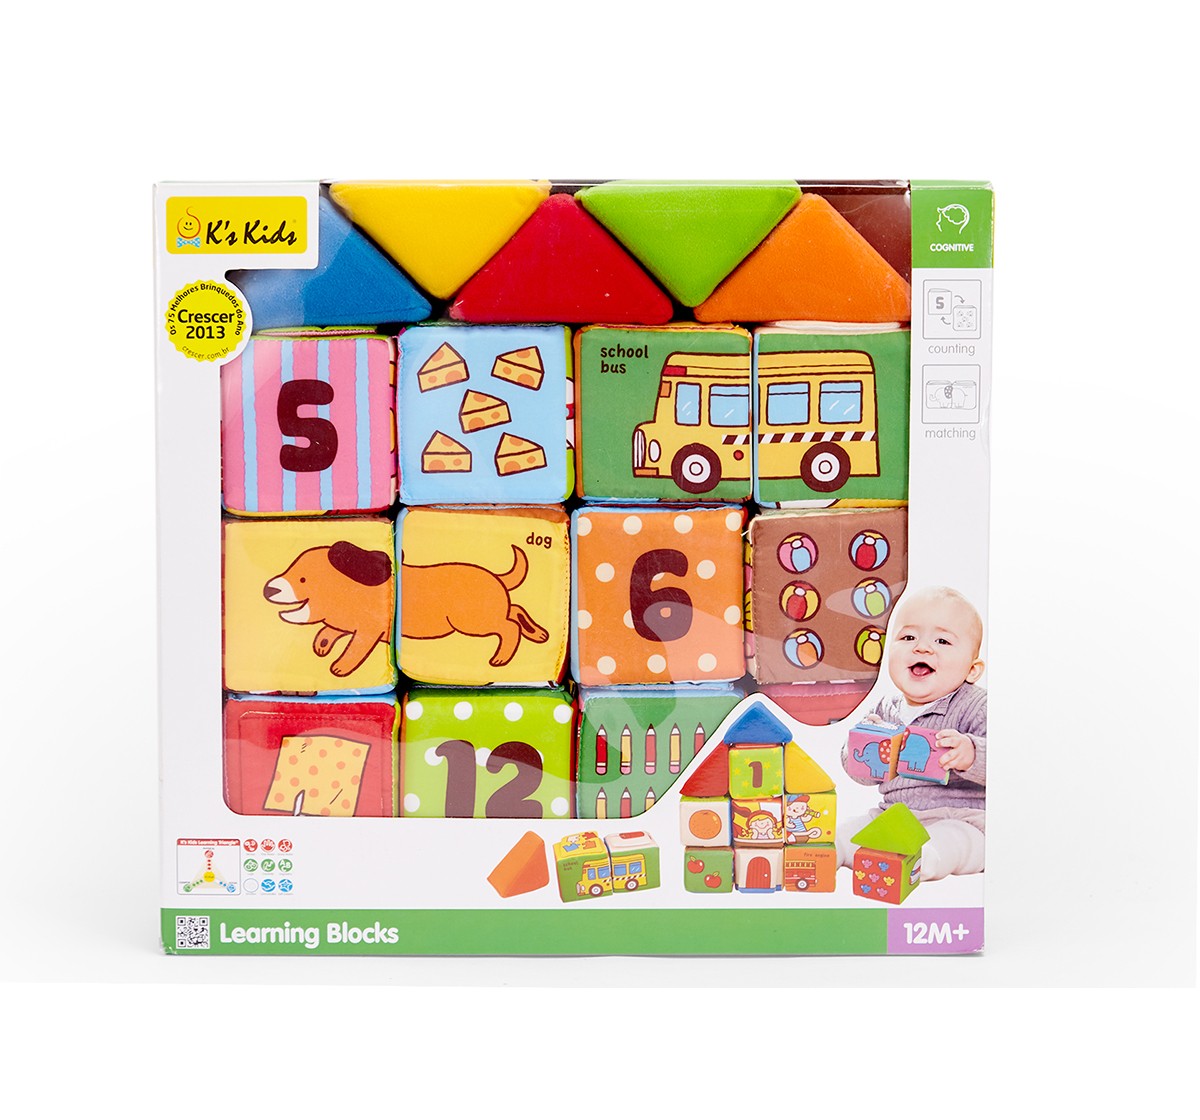 K'S Kids Learning Blocks - 17 Blocks Activity Toys for Kids age 12M+ 